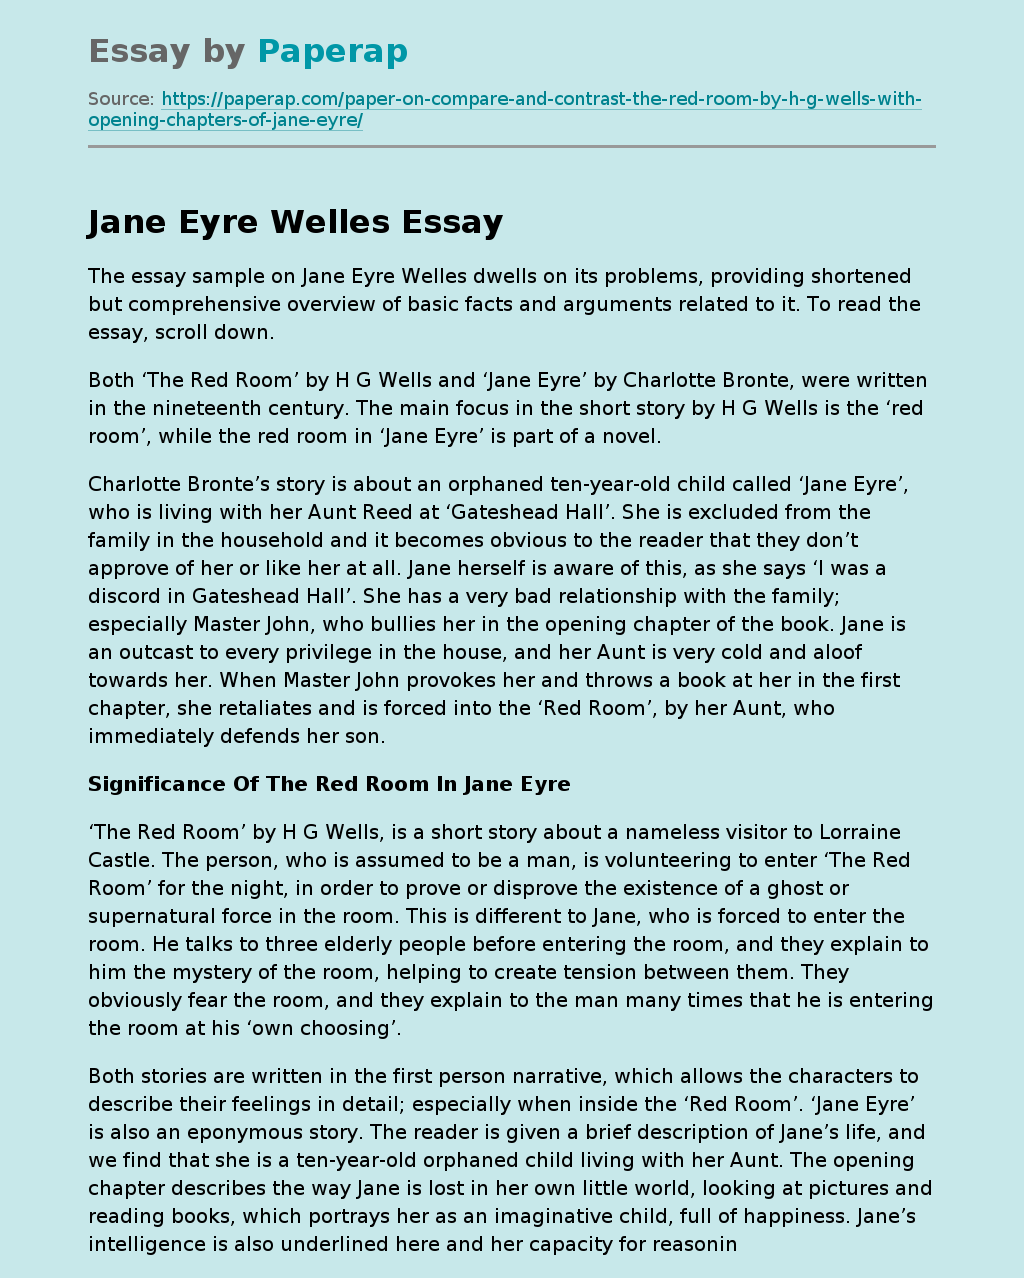 Jane Eyre Welles